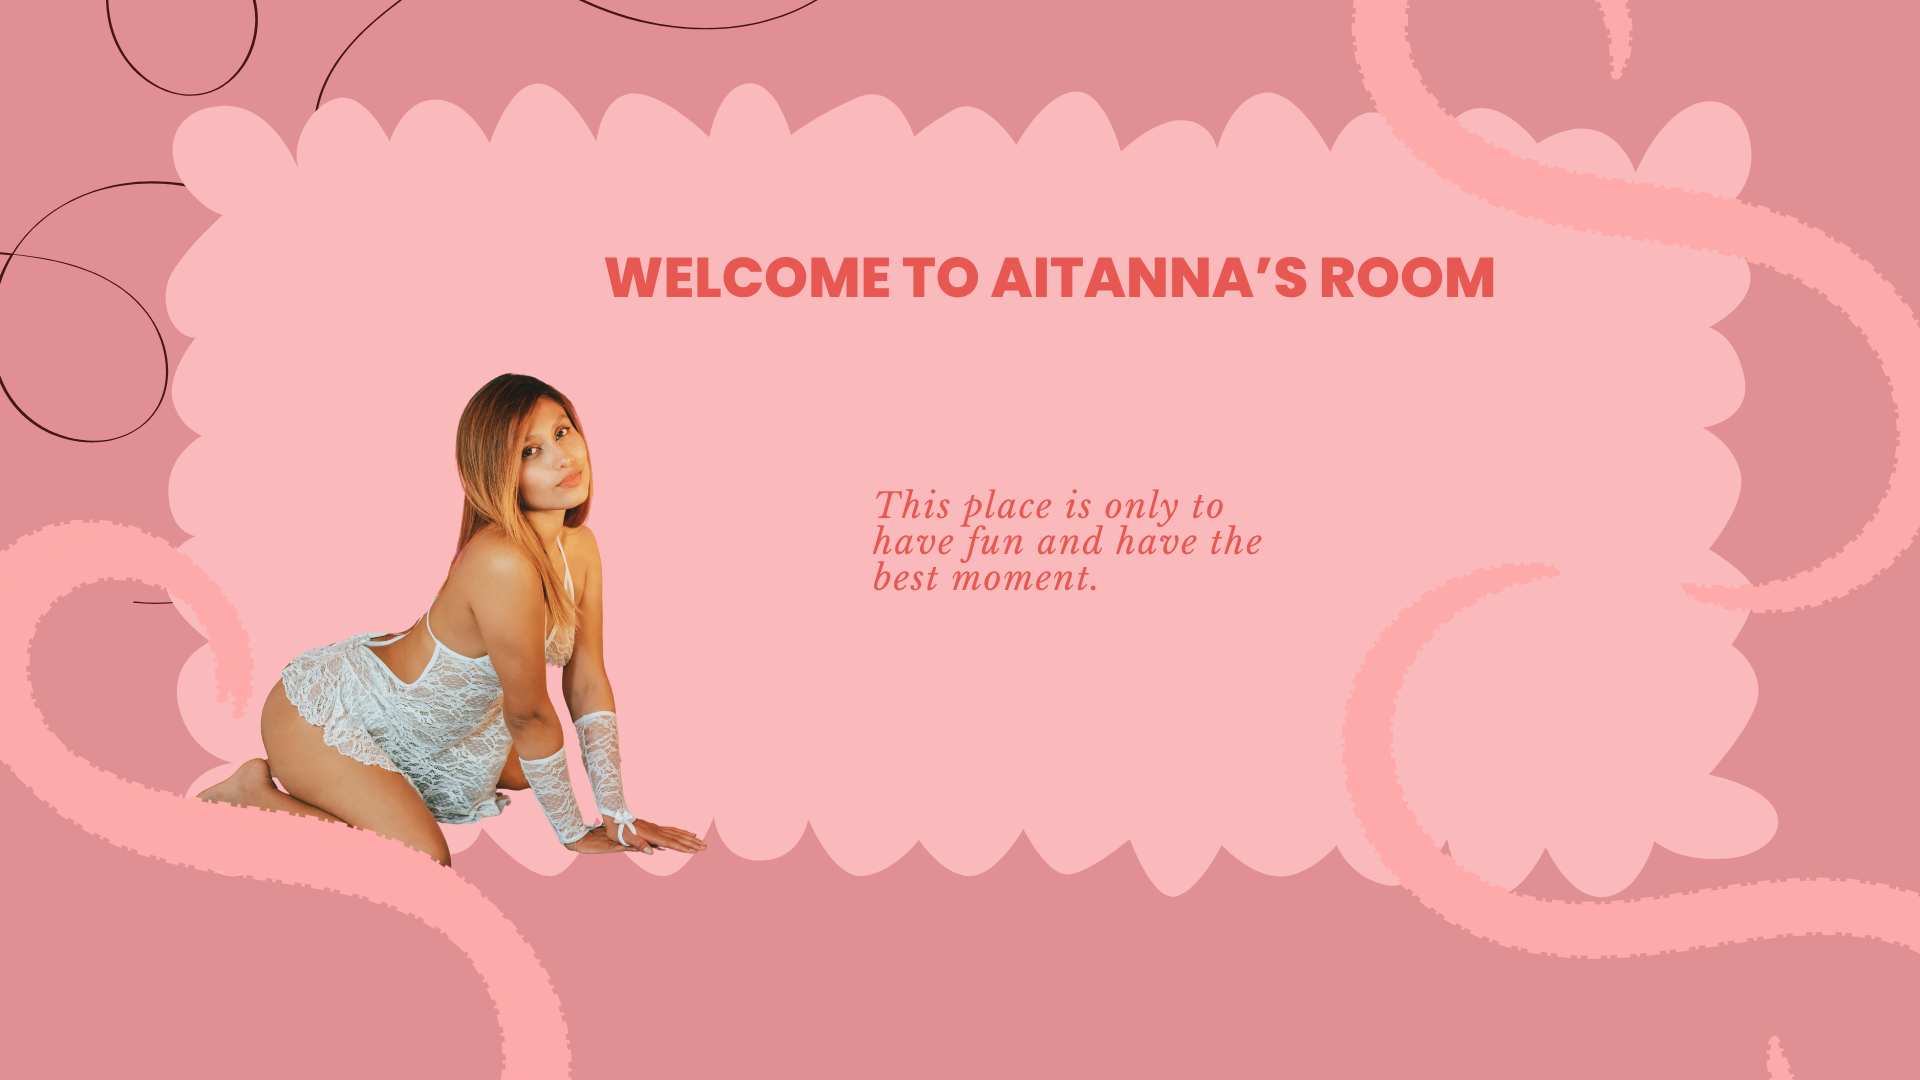 Aitanna-27 Welcome! image: 1